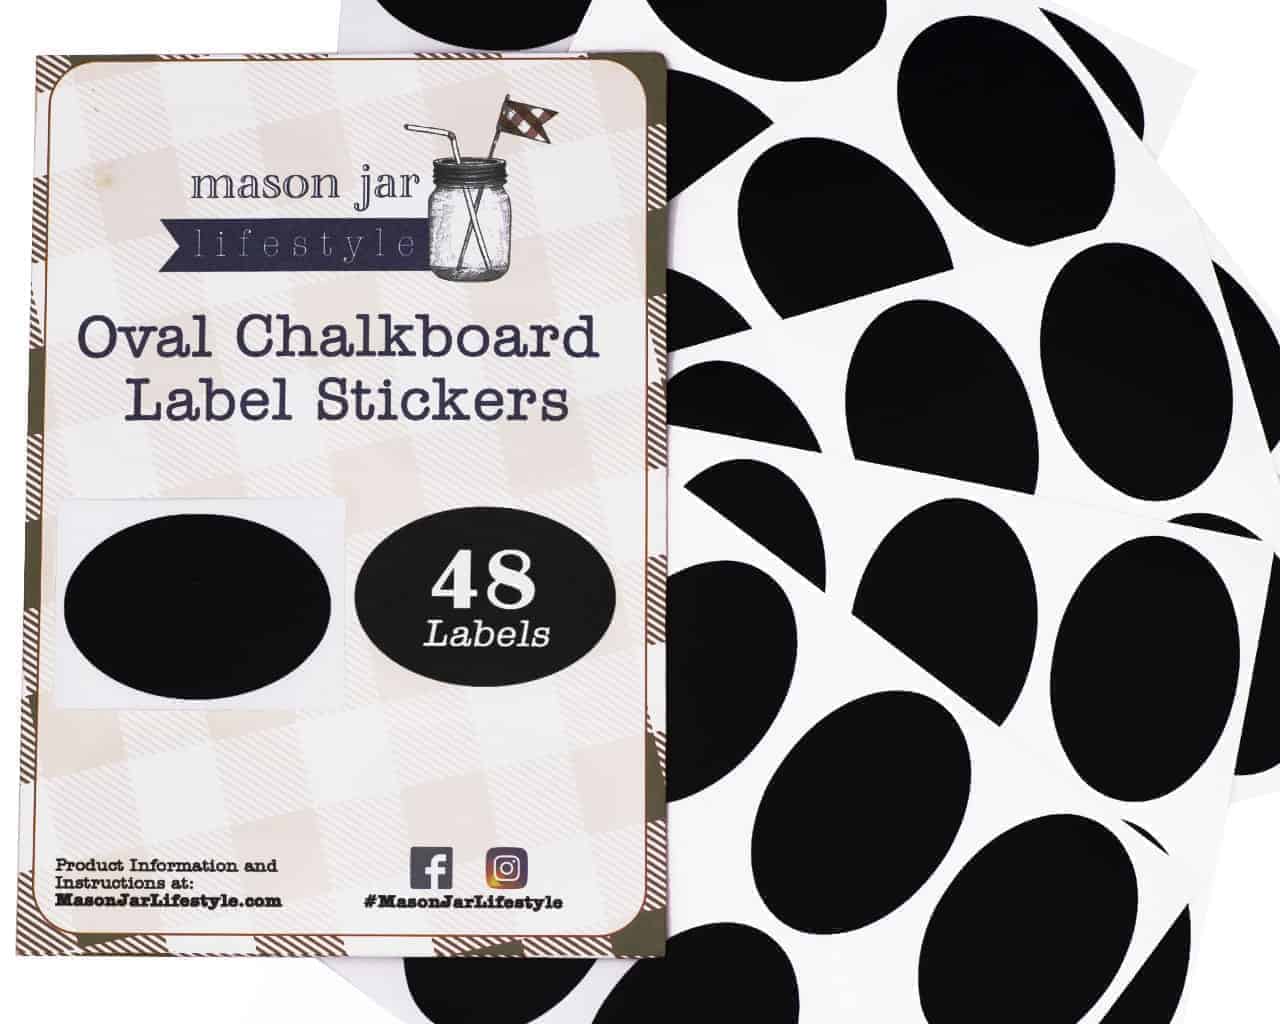 Vinyl Chalkboard Labels Stickers 48 Pack Oval